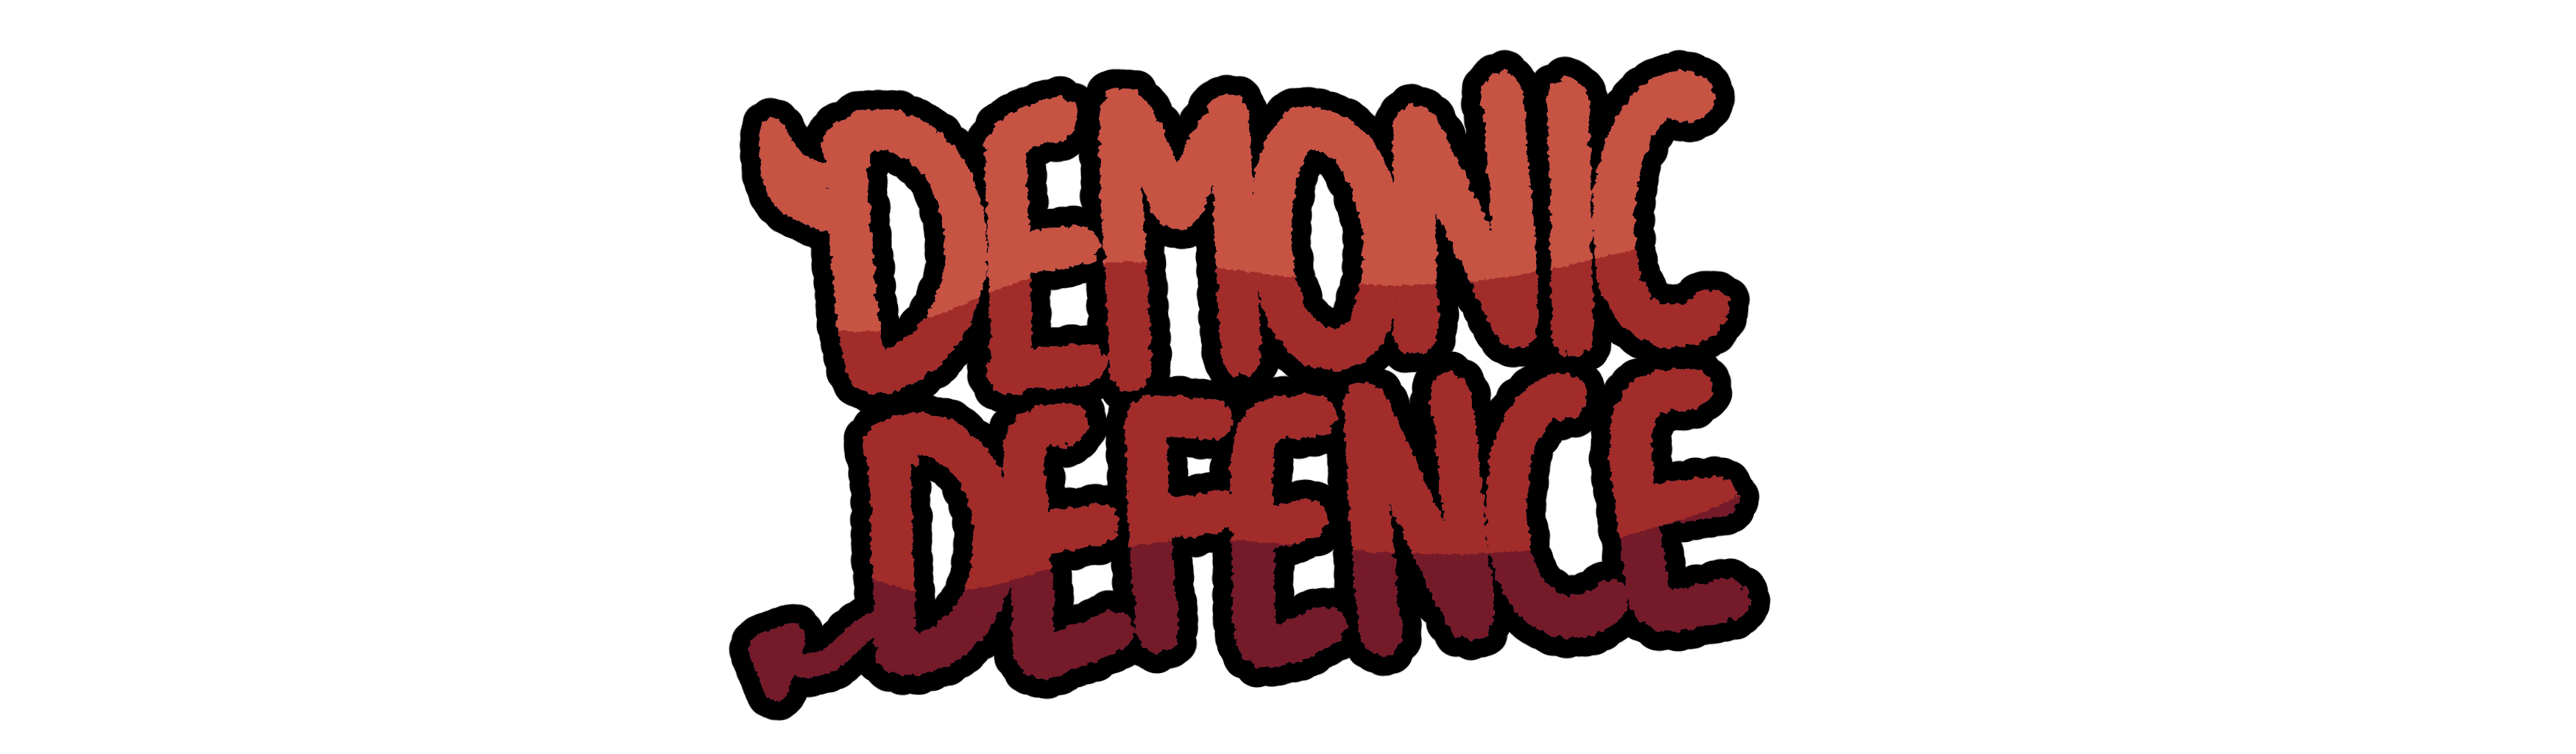 Demonic Defence